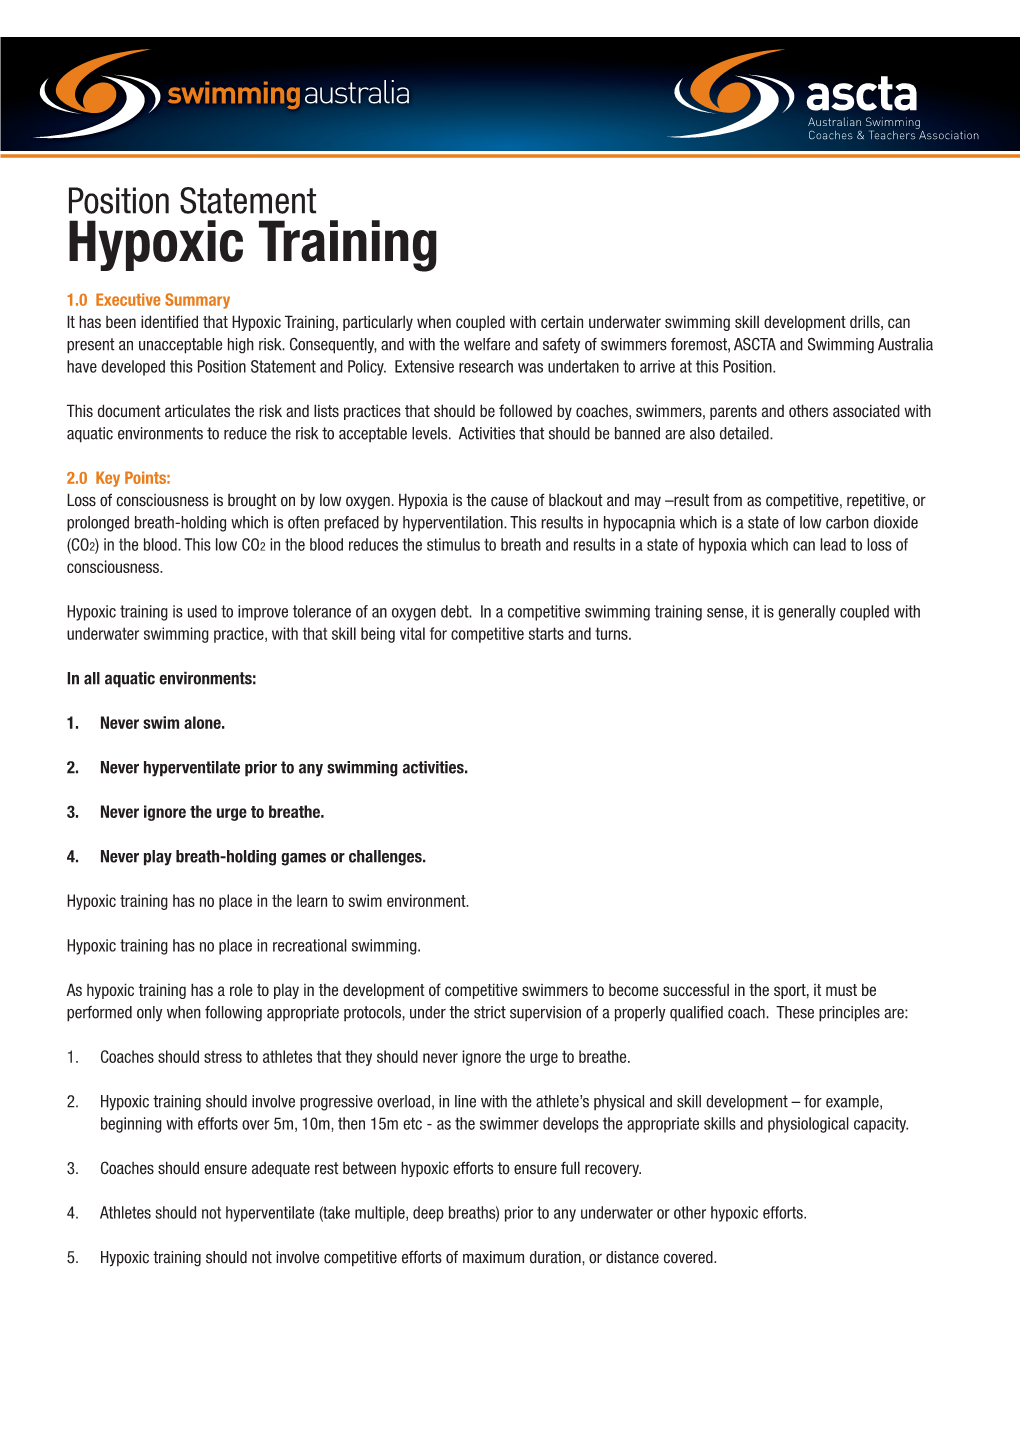 Hypoxic Training